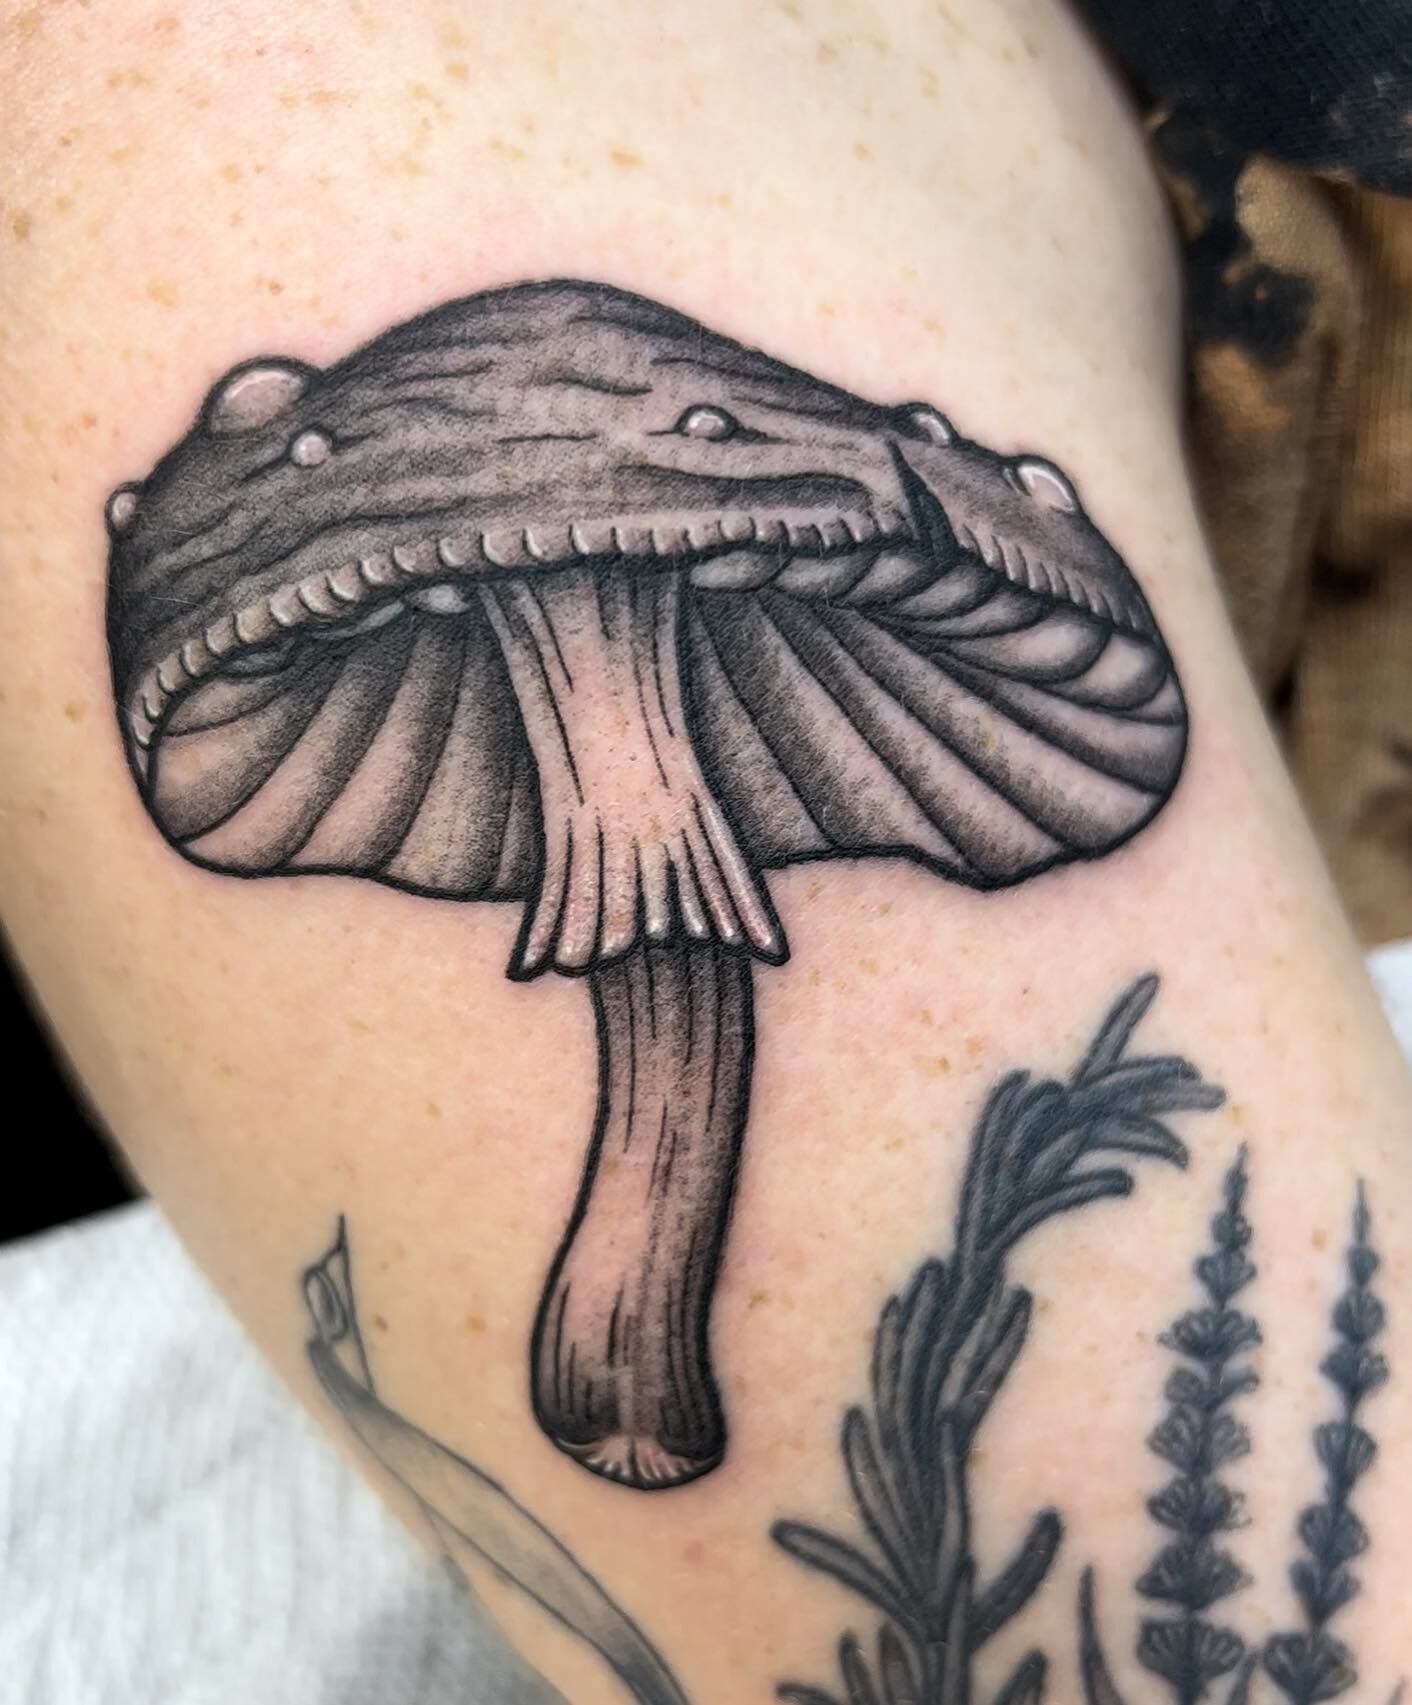 Dot-work Mushroom Flash 
Done by @island_ink345 

#nature #mushroom #mushroomtattoo #flashtattoo #tattoo #shroomtattoo #cayman #mushroomflashtattoo #dotworkmushroom  #neotraditional #blackwork #fyp #explore #tattoosubmission #tattooart #caymantattoos